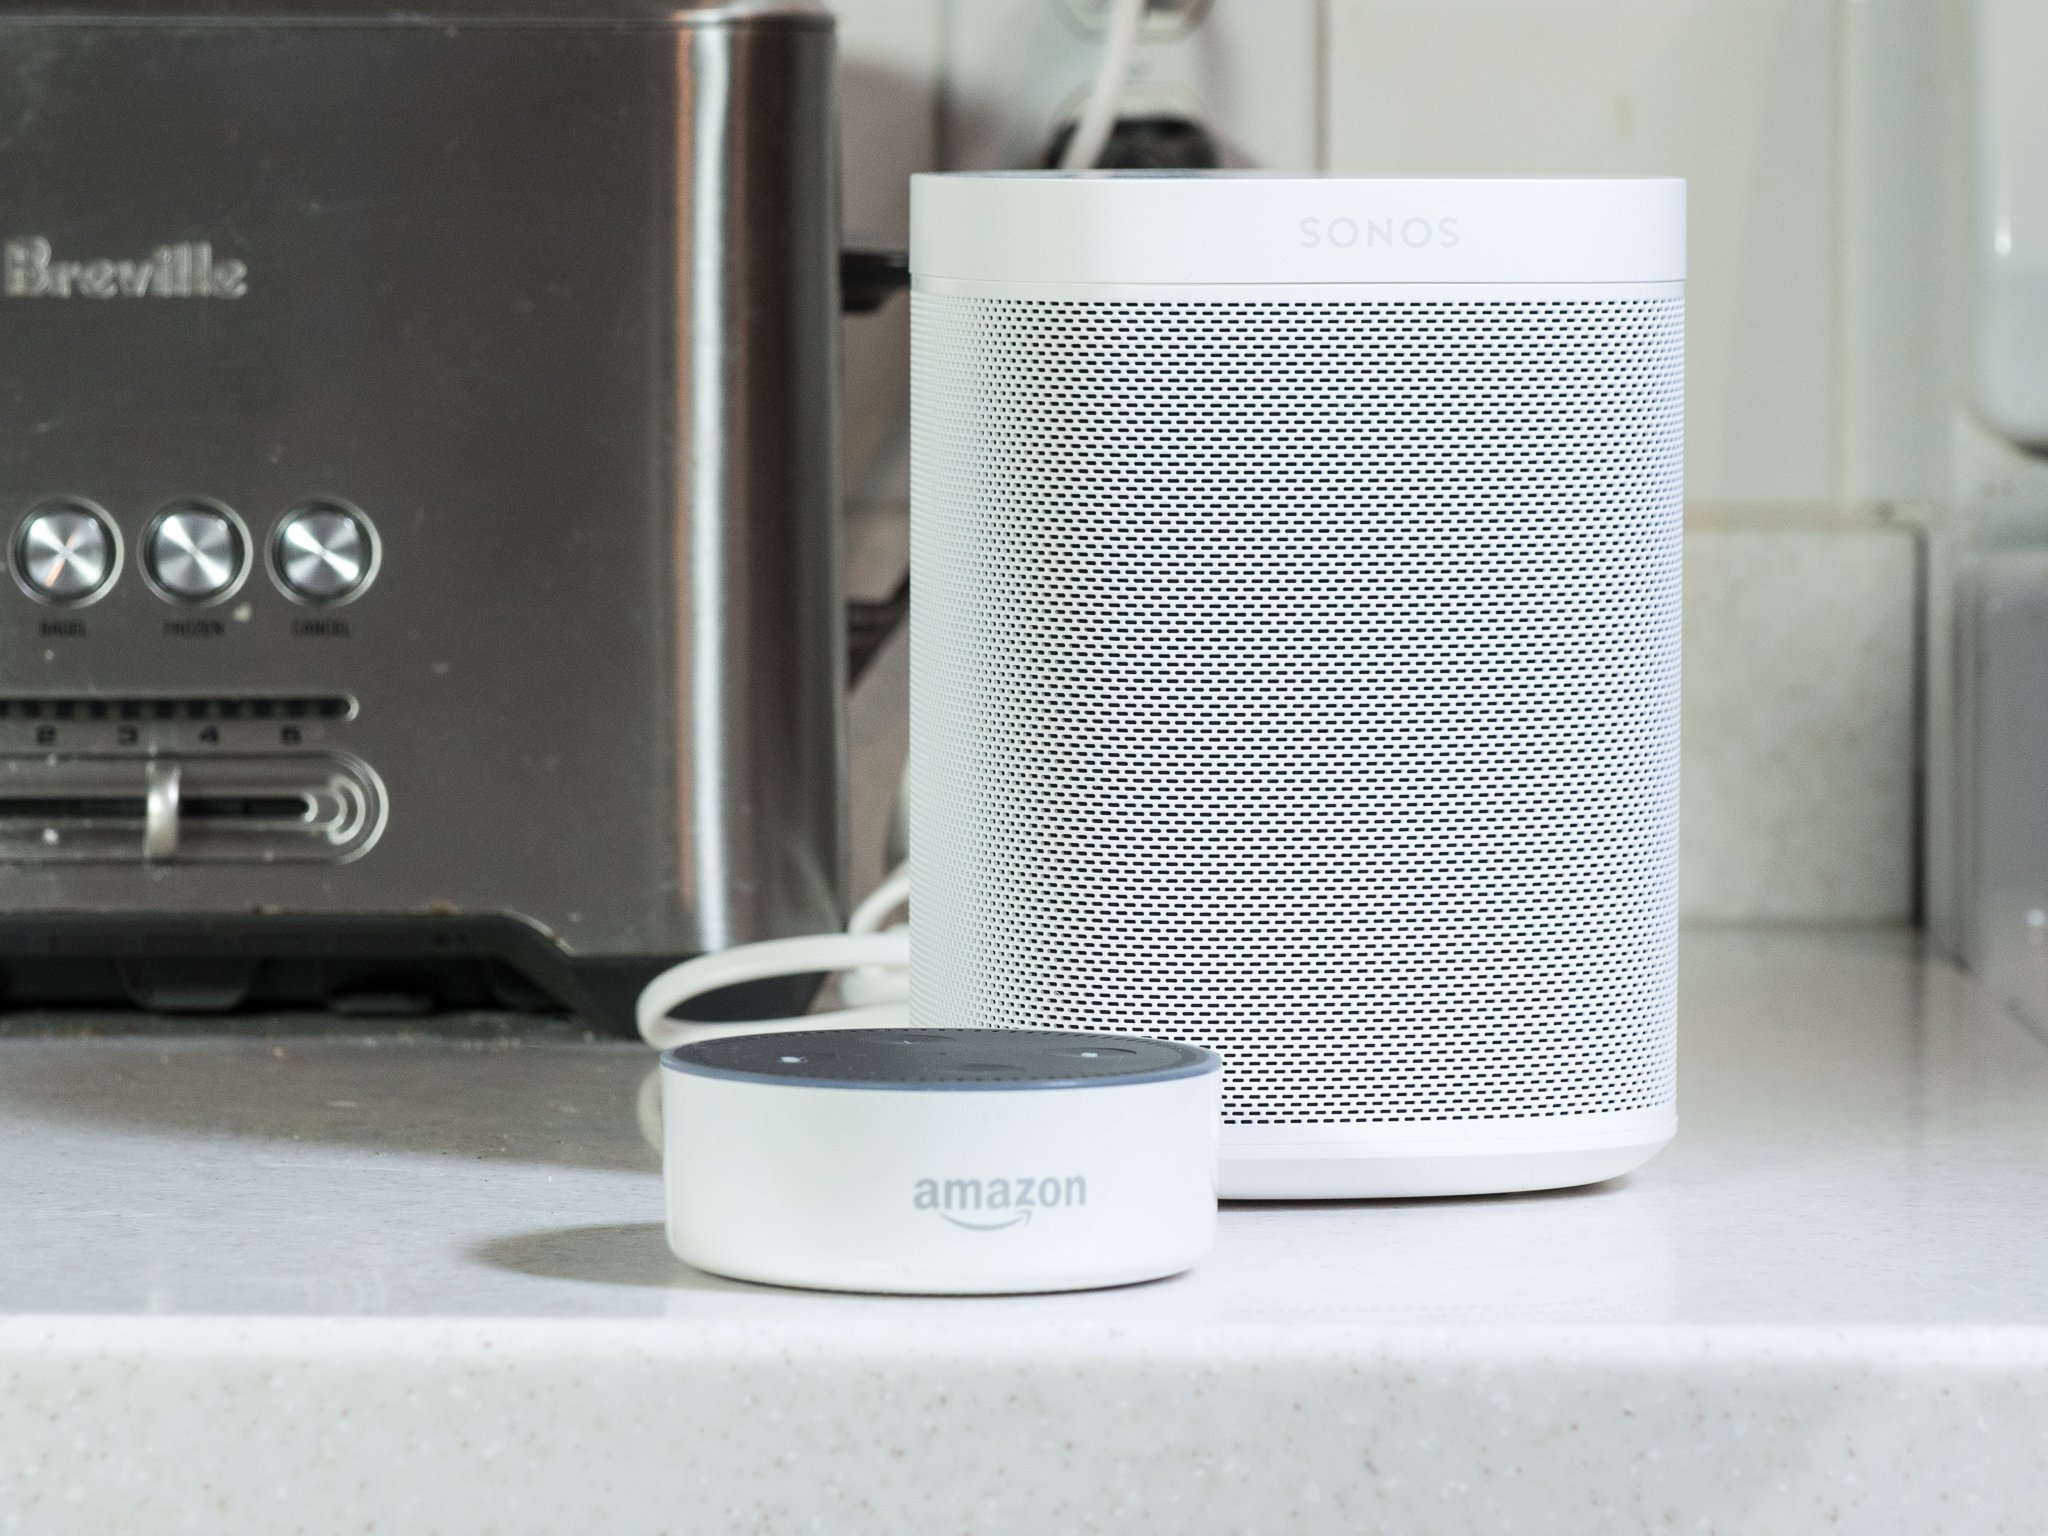 Sonos One and Amazon Echo Dot